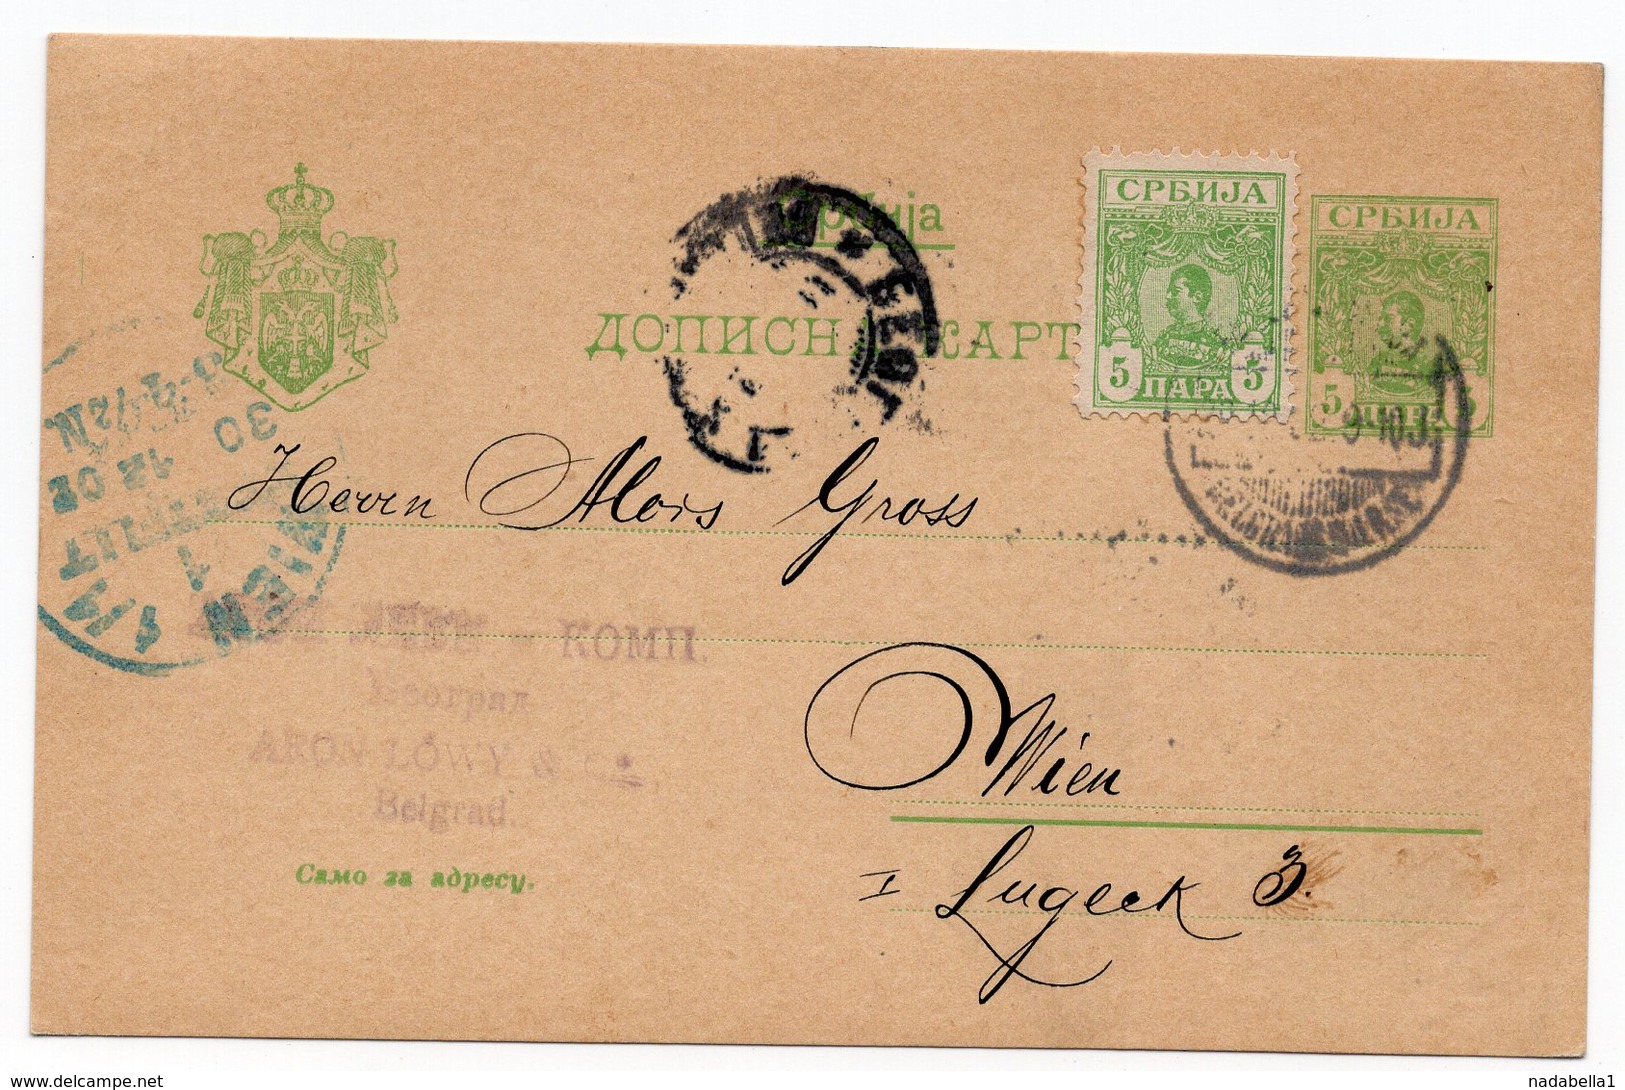 1902 SERBIA, SERBIA JUDAICA, BELGRADE TO VIENNA, ARON LOWY COMPANY FLAM, STATIONERY CARD - Serbien